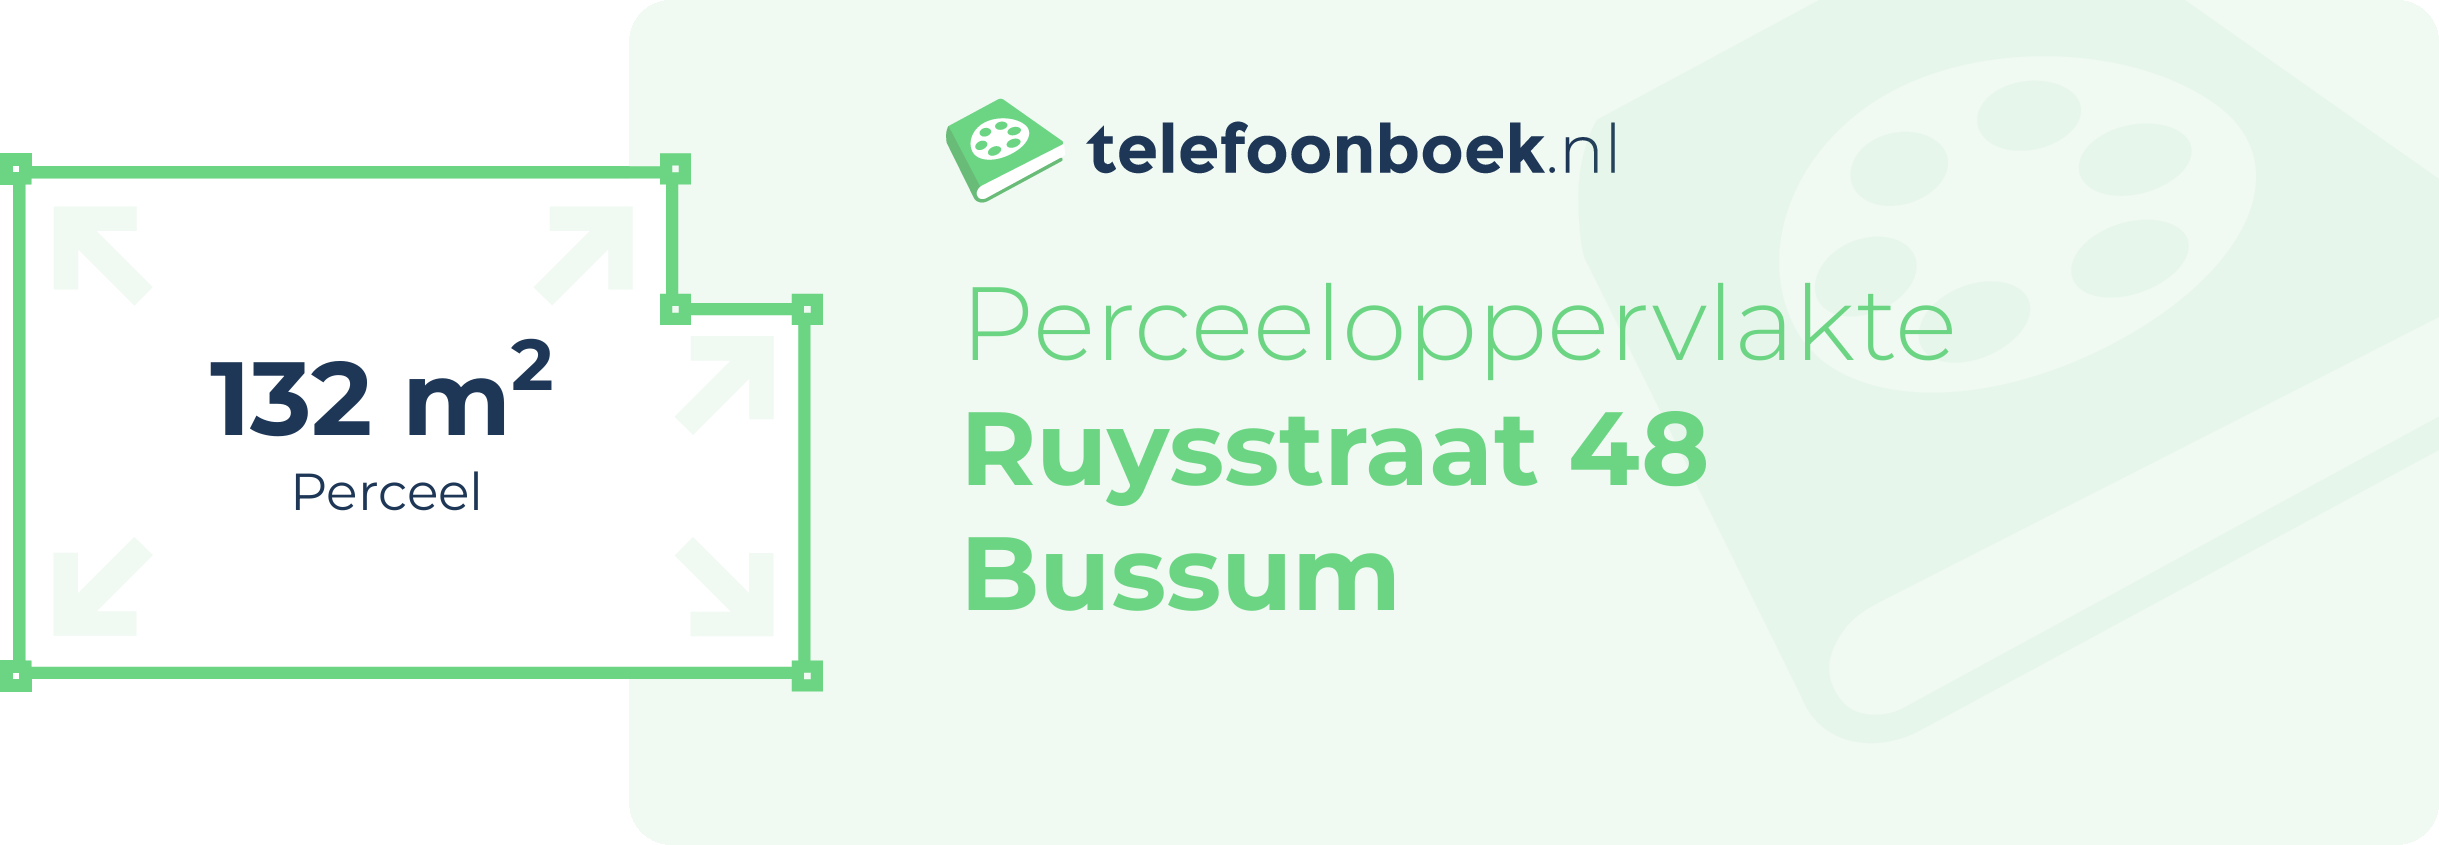 Perceeloppervlakte Ruysstraat 48 Bussum